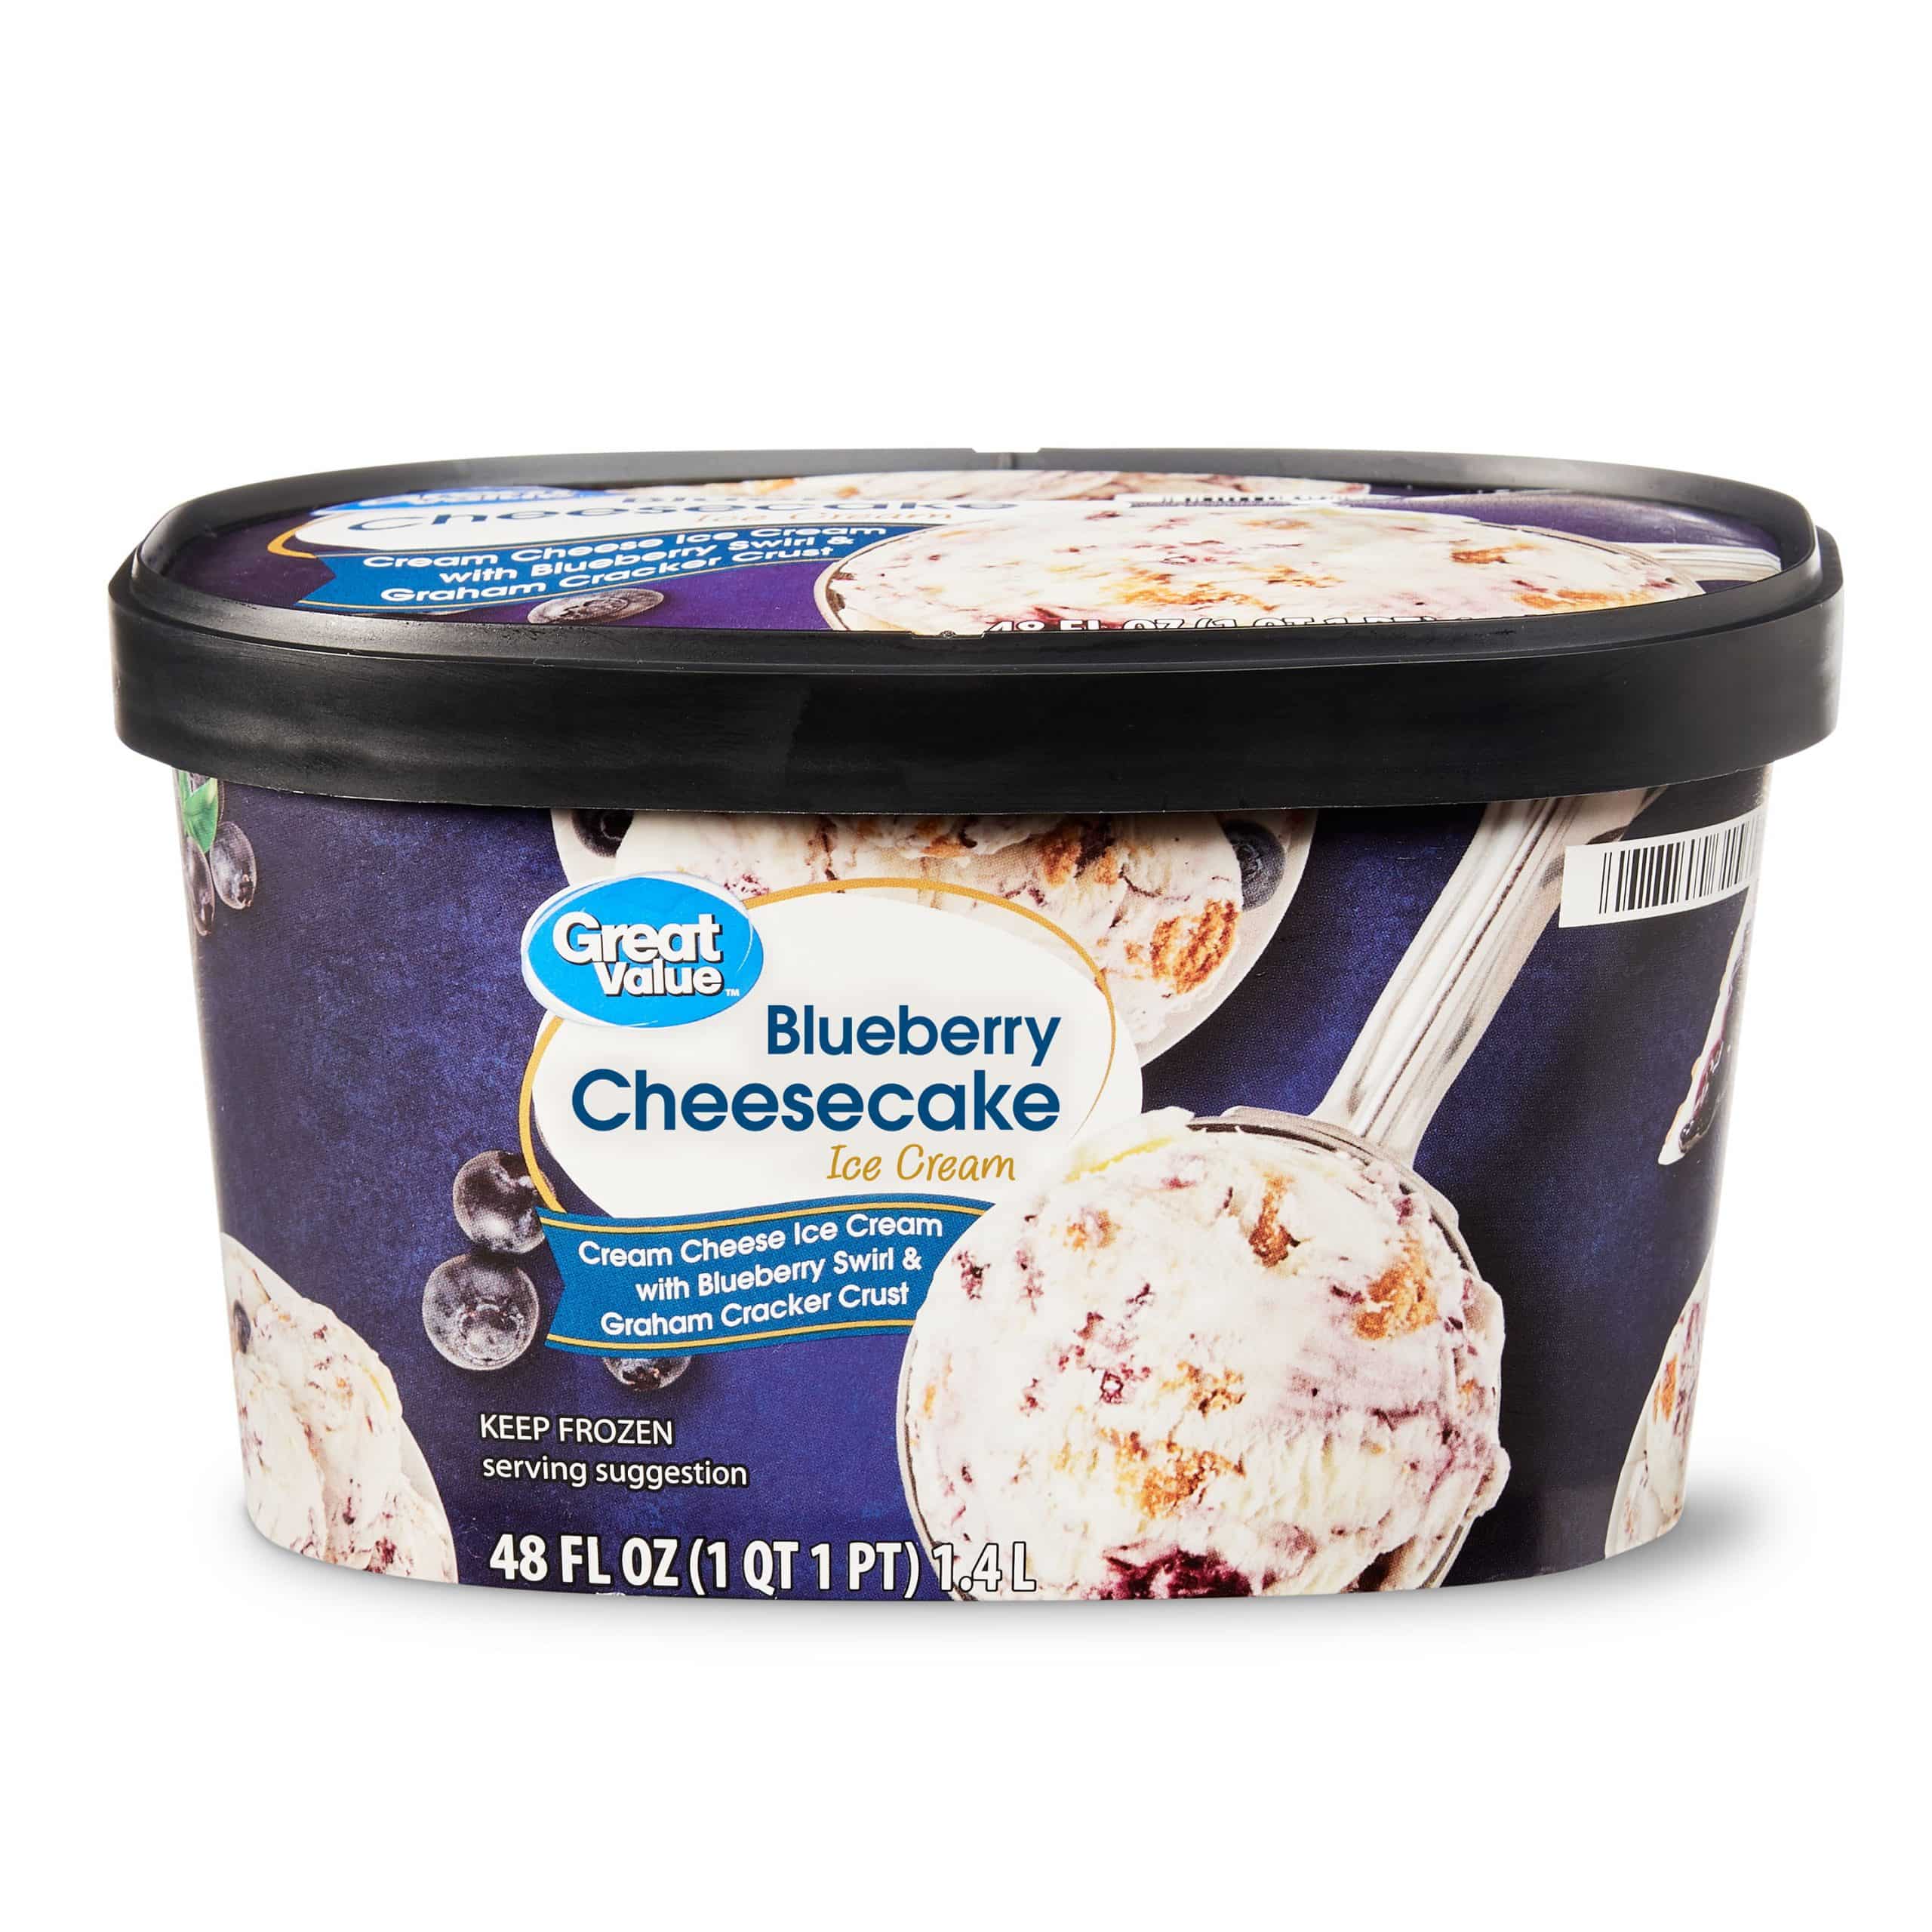 Great Value Blueberry Cheesecake Ice Cream, 48 fl oz